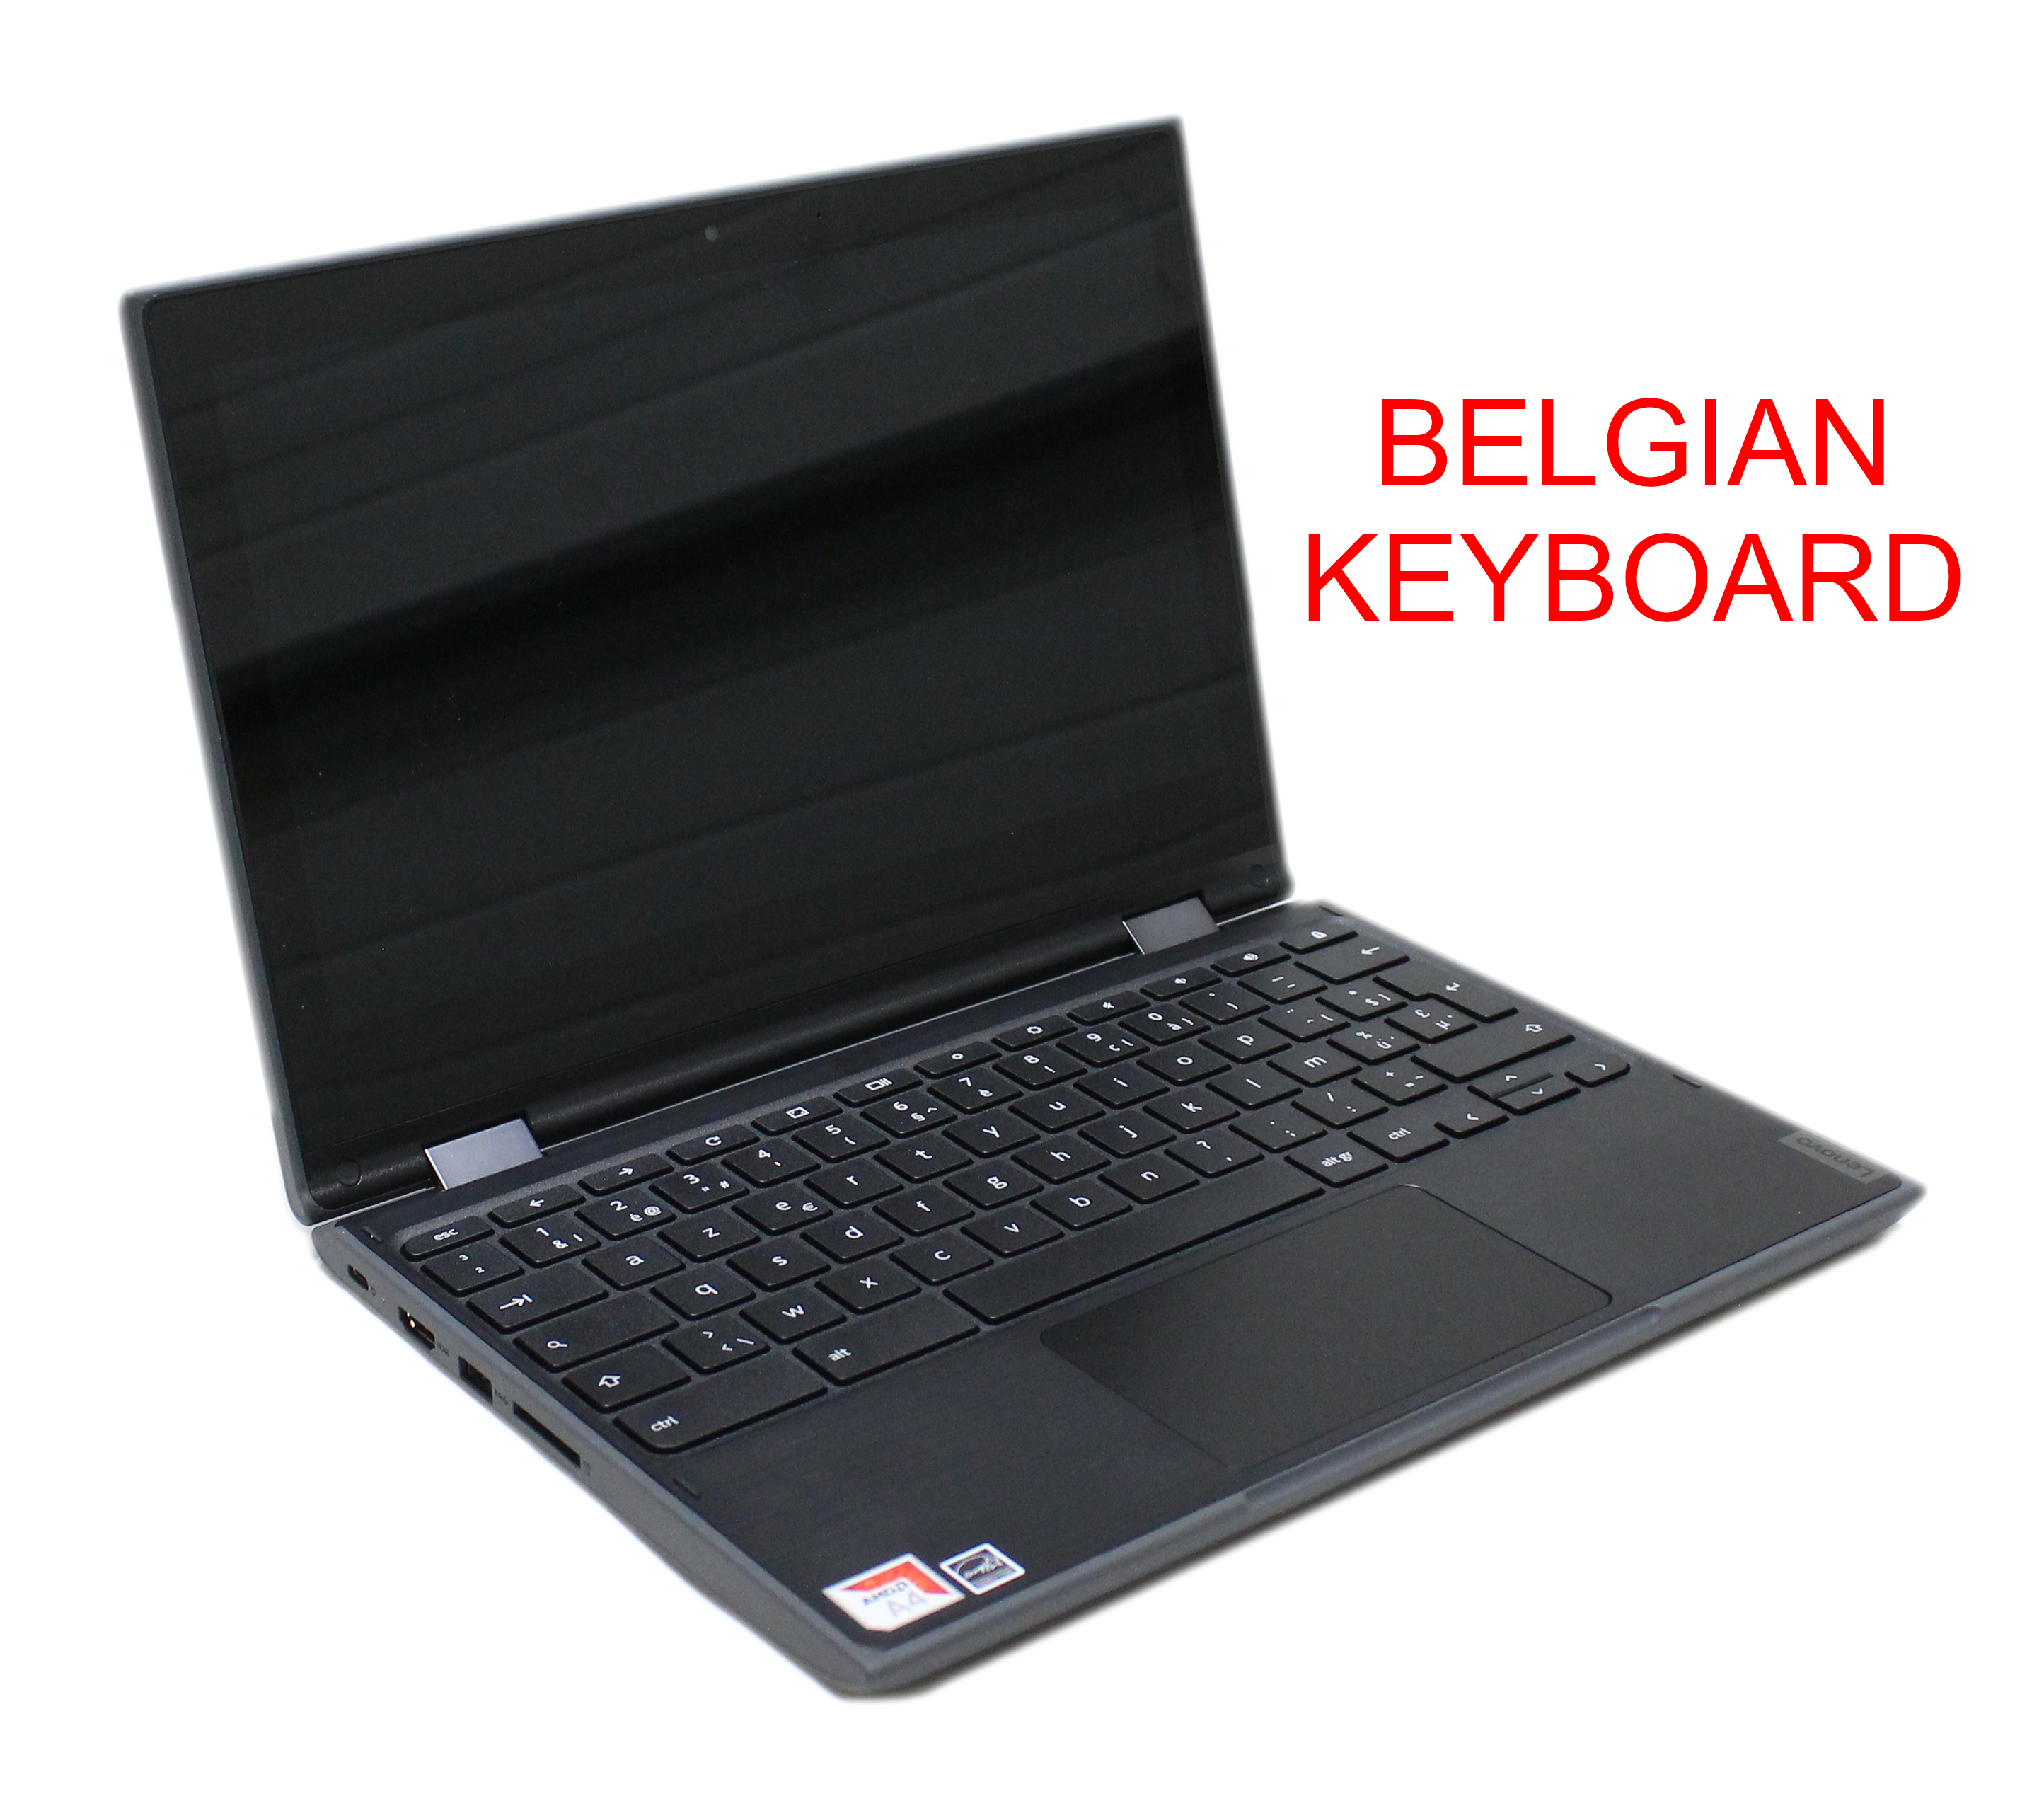 Lenovo 300e Chromebook G2 11.6" Belgian Keyboard RAM 4GB eMMC 32G 82CE0000US